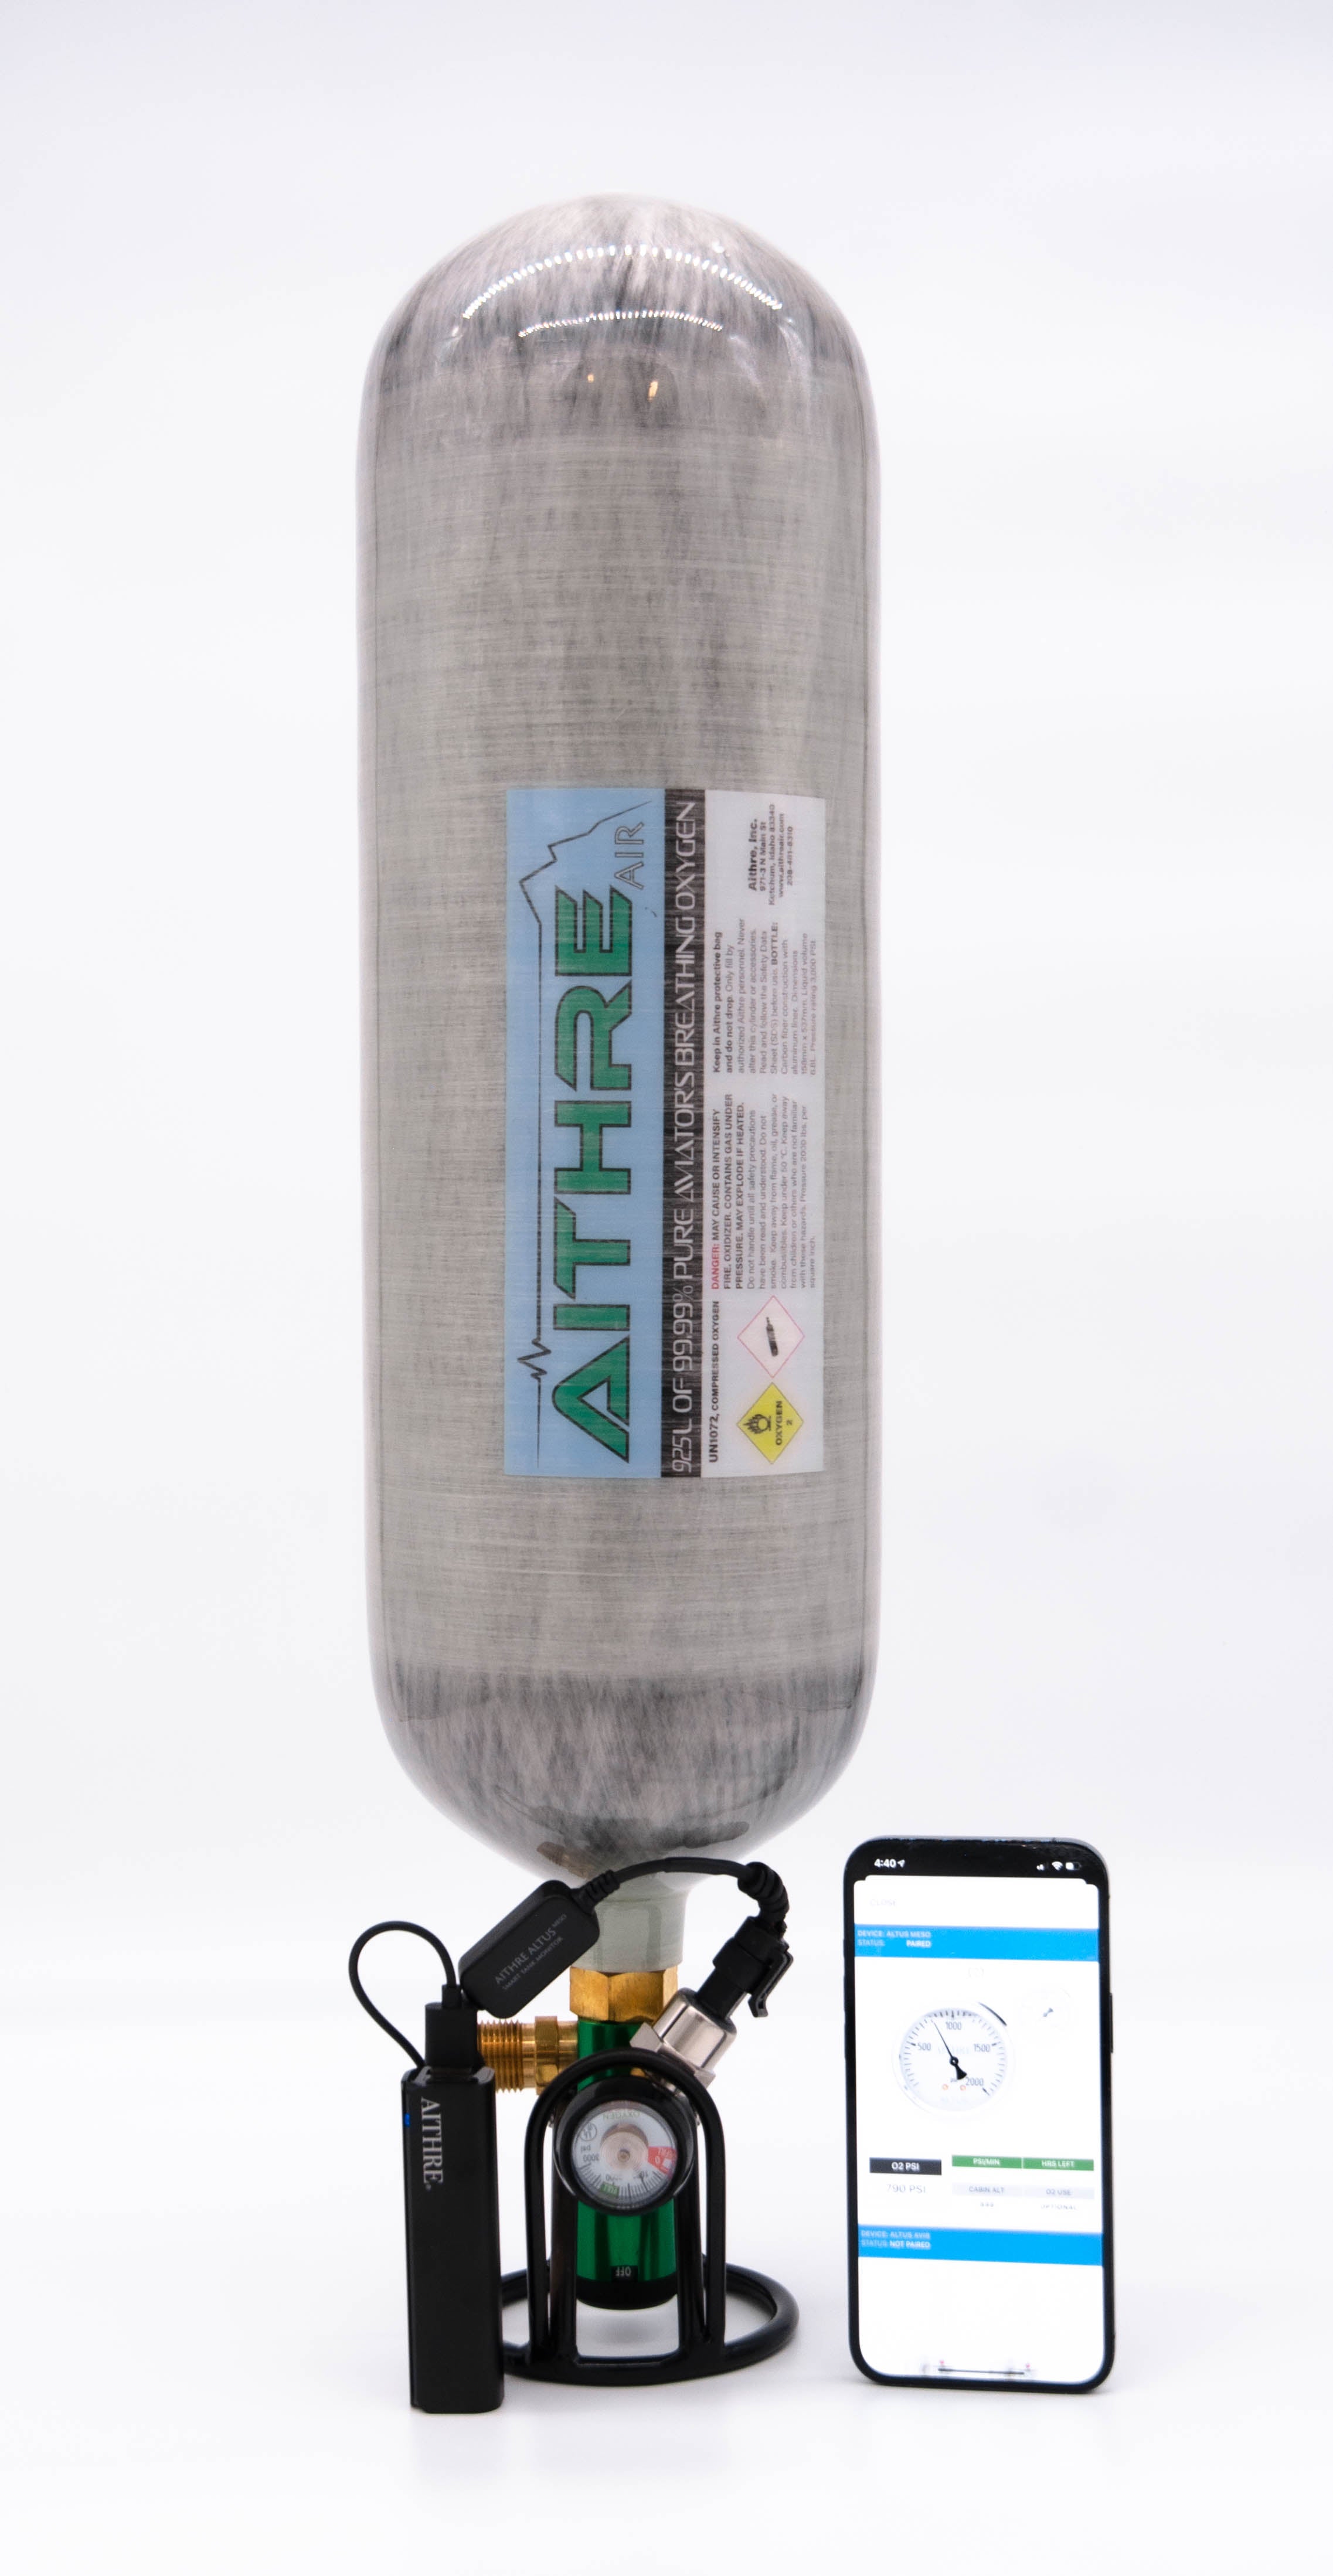 Altus Meso Portable Oxygen Tank Pressure Monitor - With iOS App - Black